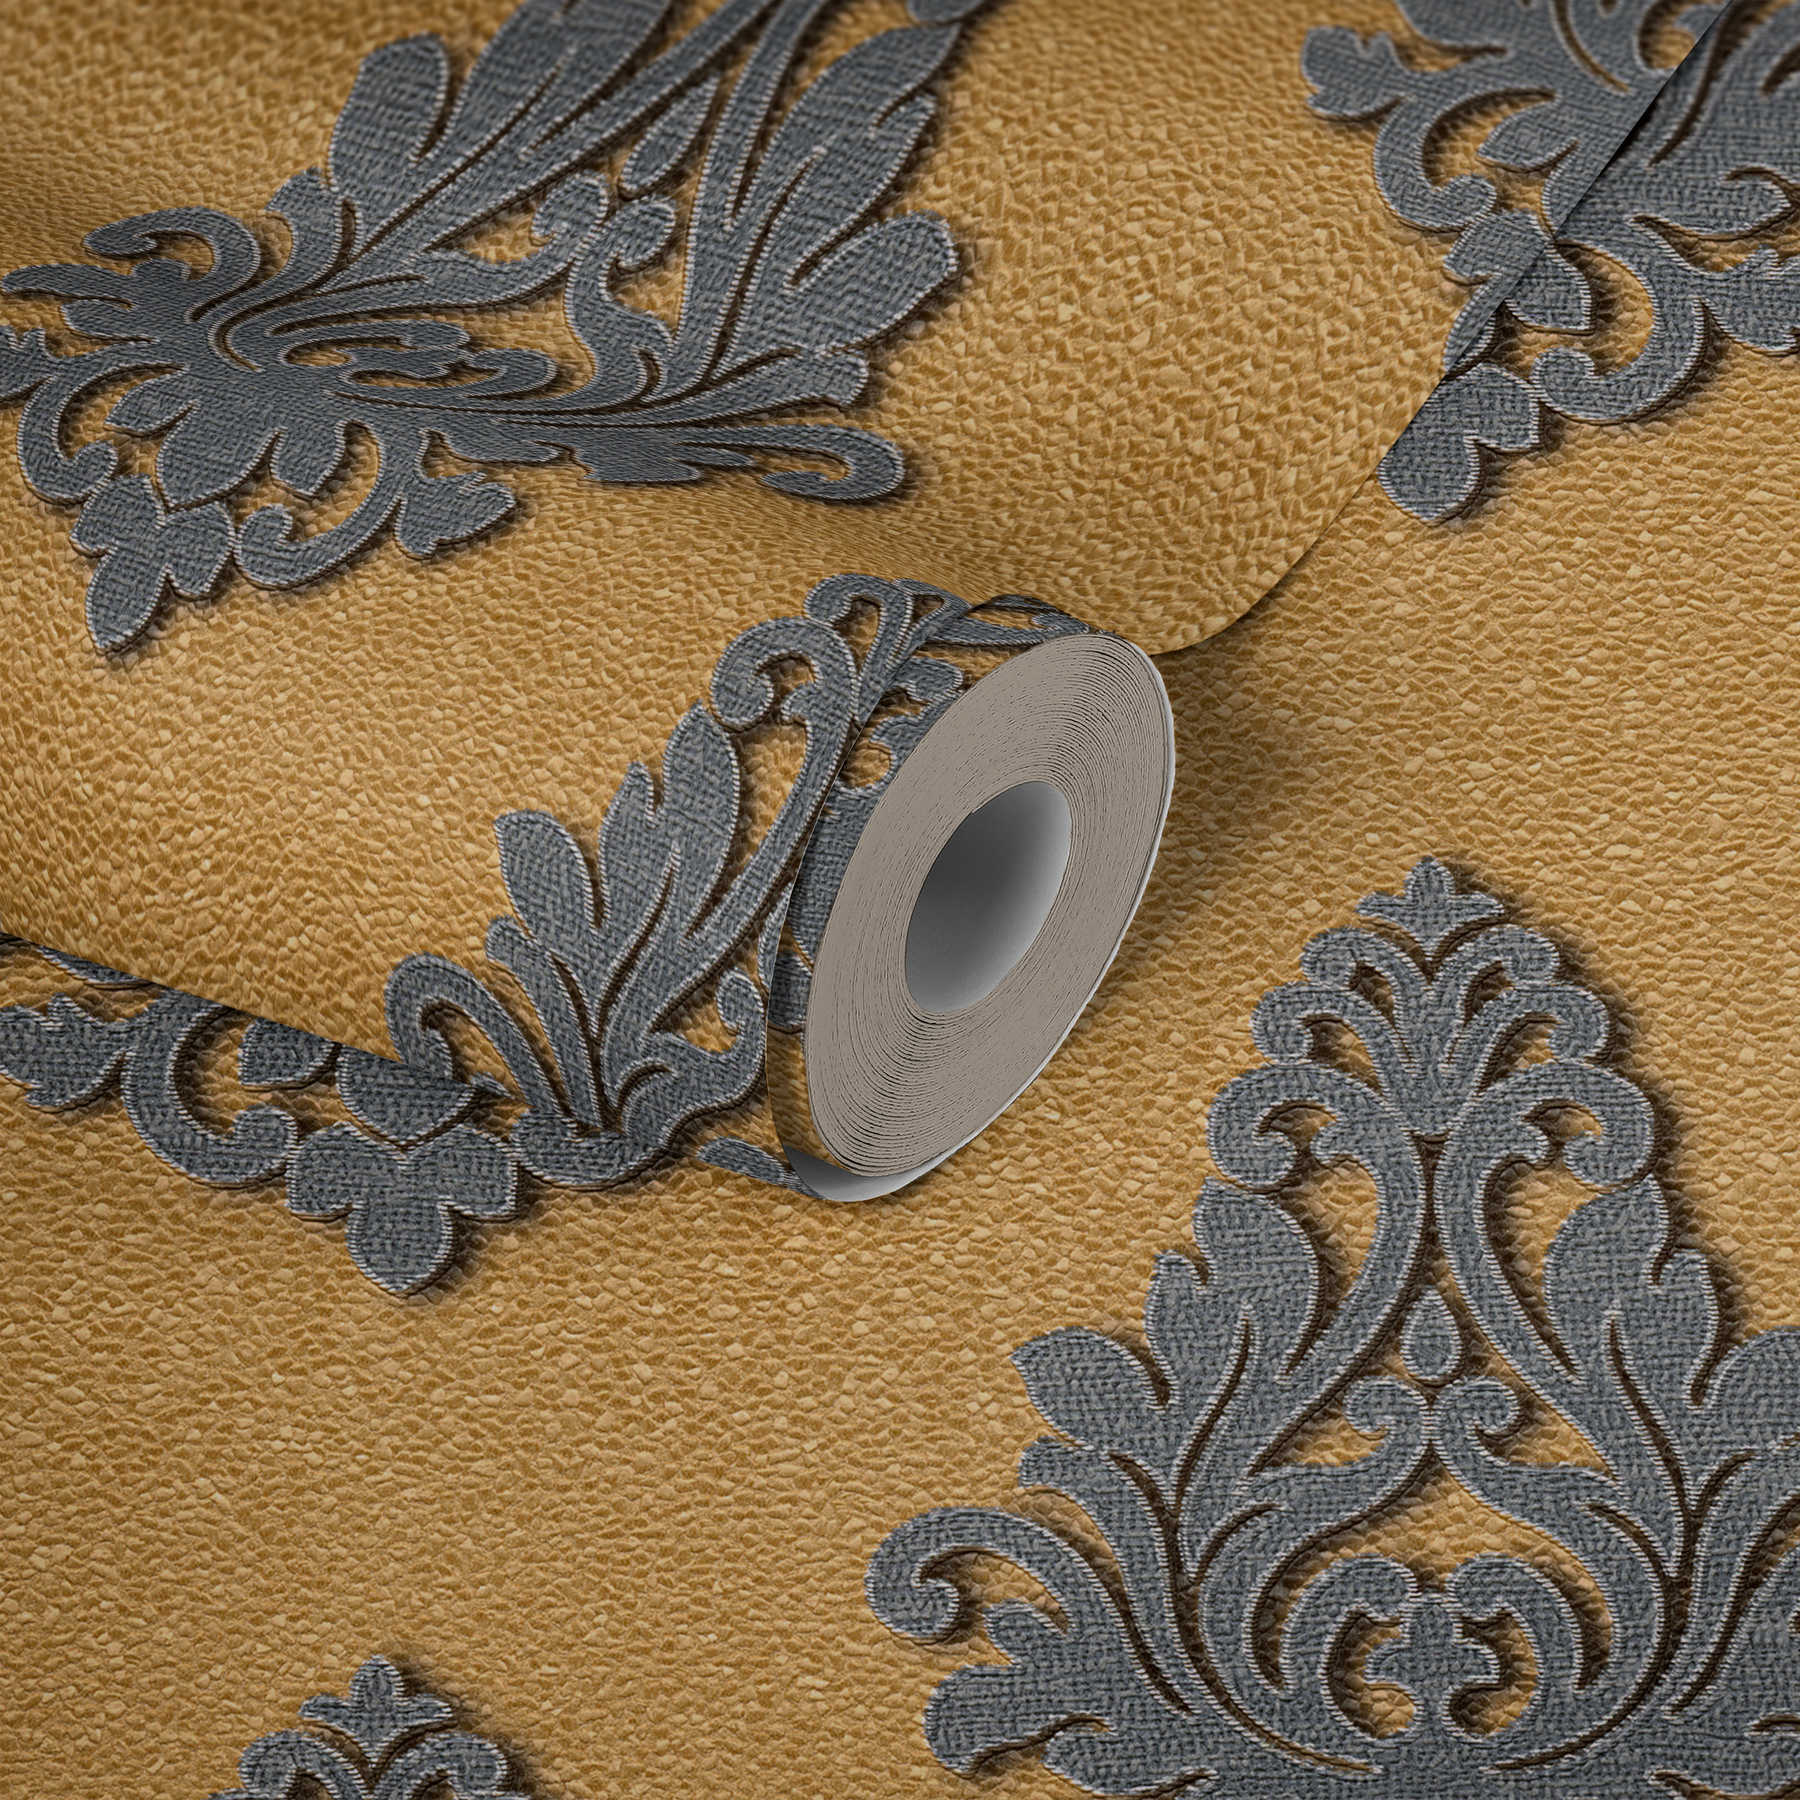             Non-woven wallpaper with baroque ornaments - gold, grey
        